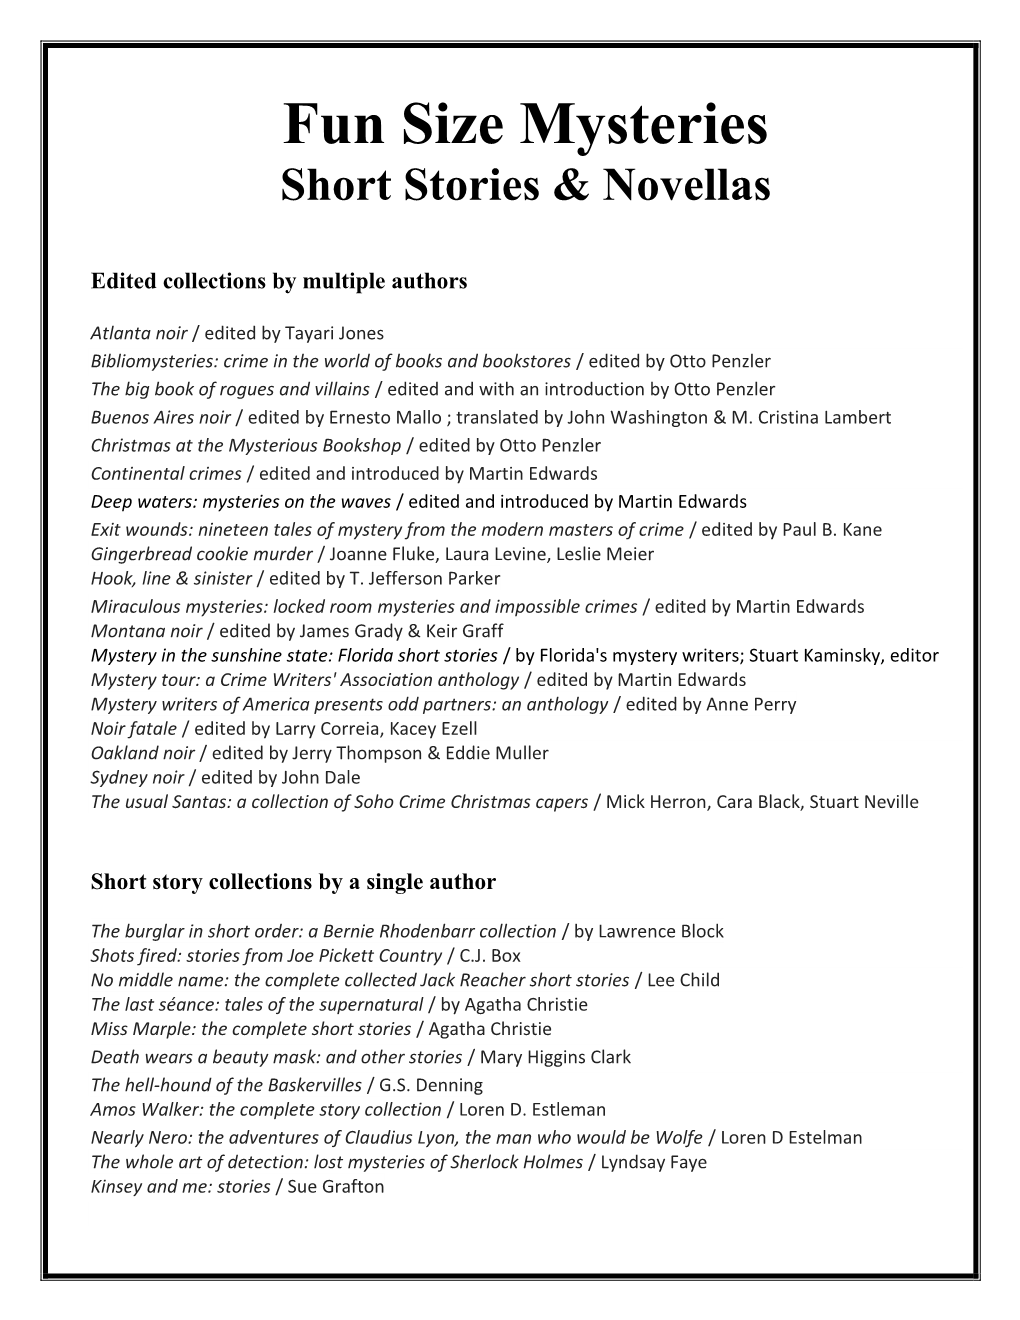 Fun Size Mysteries Short Stories & Novellas